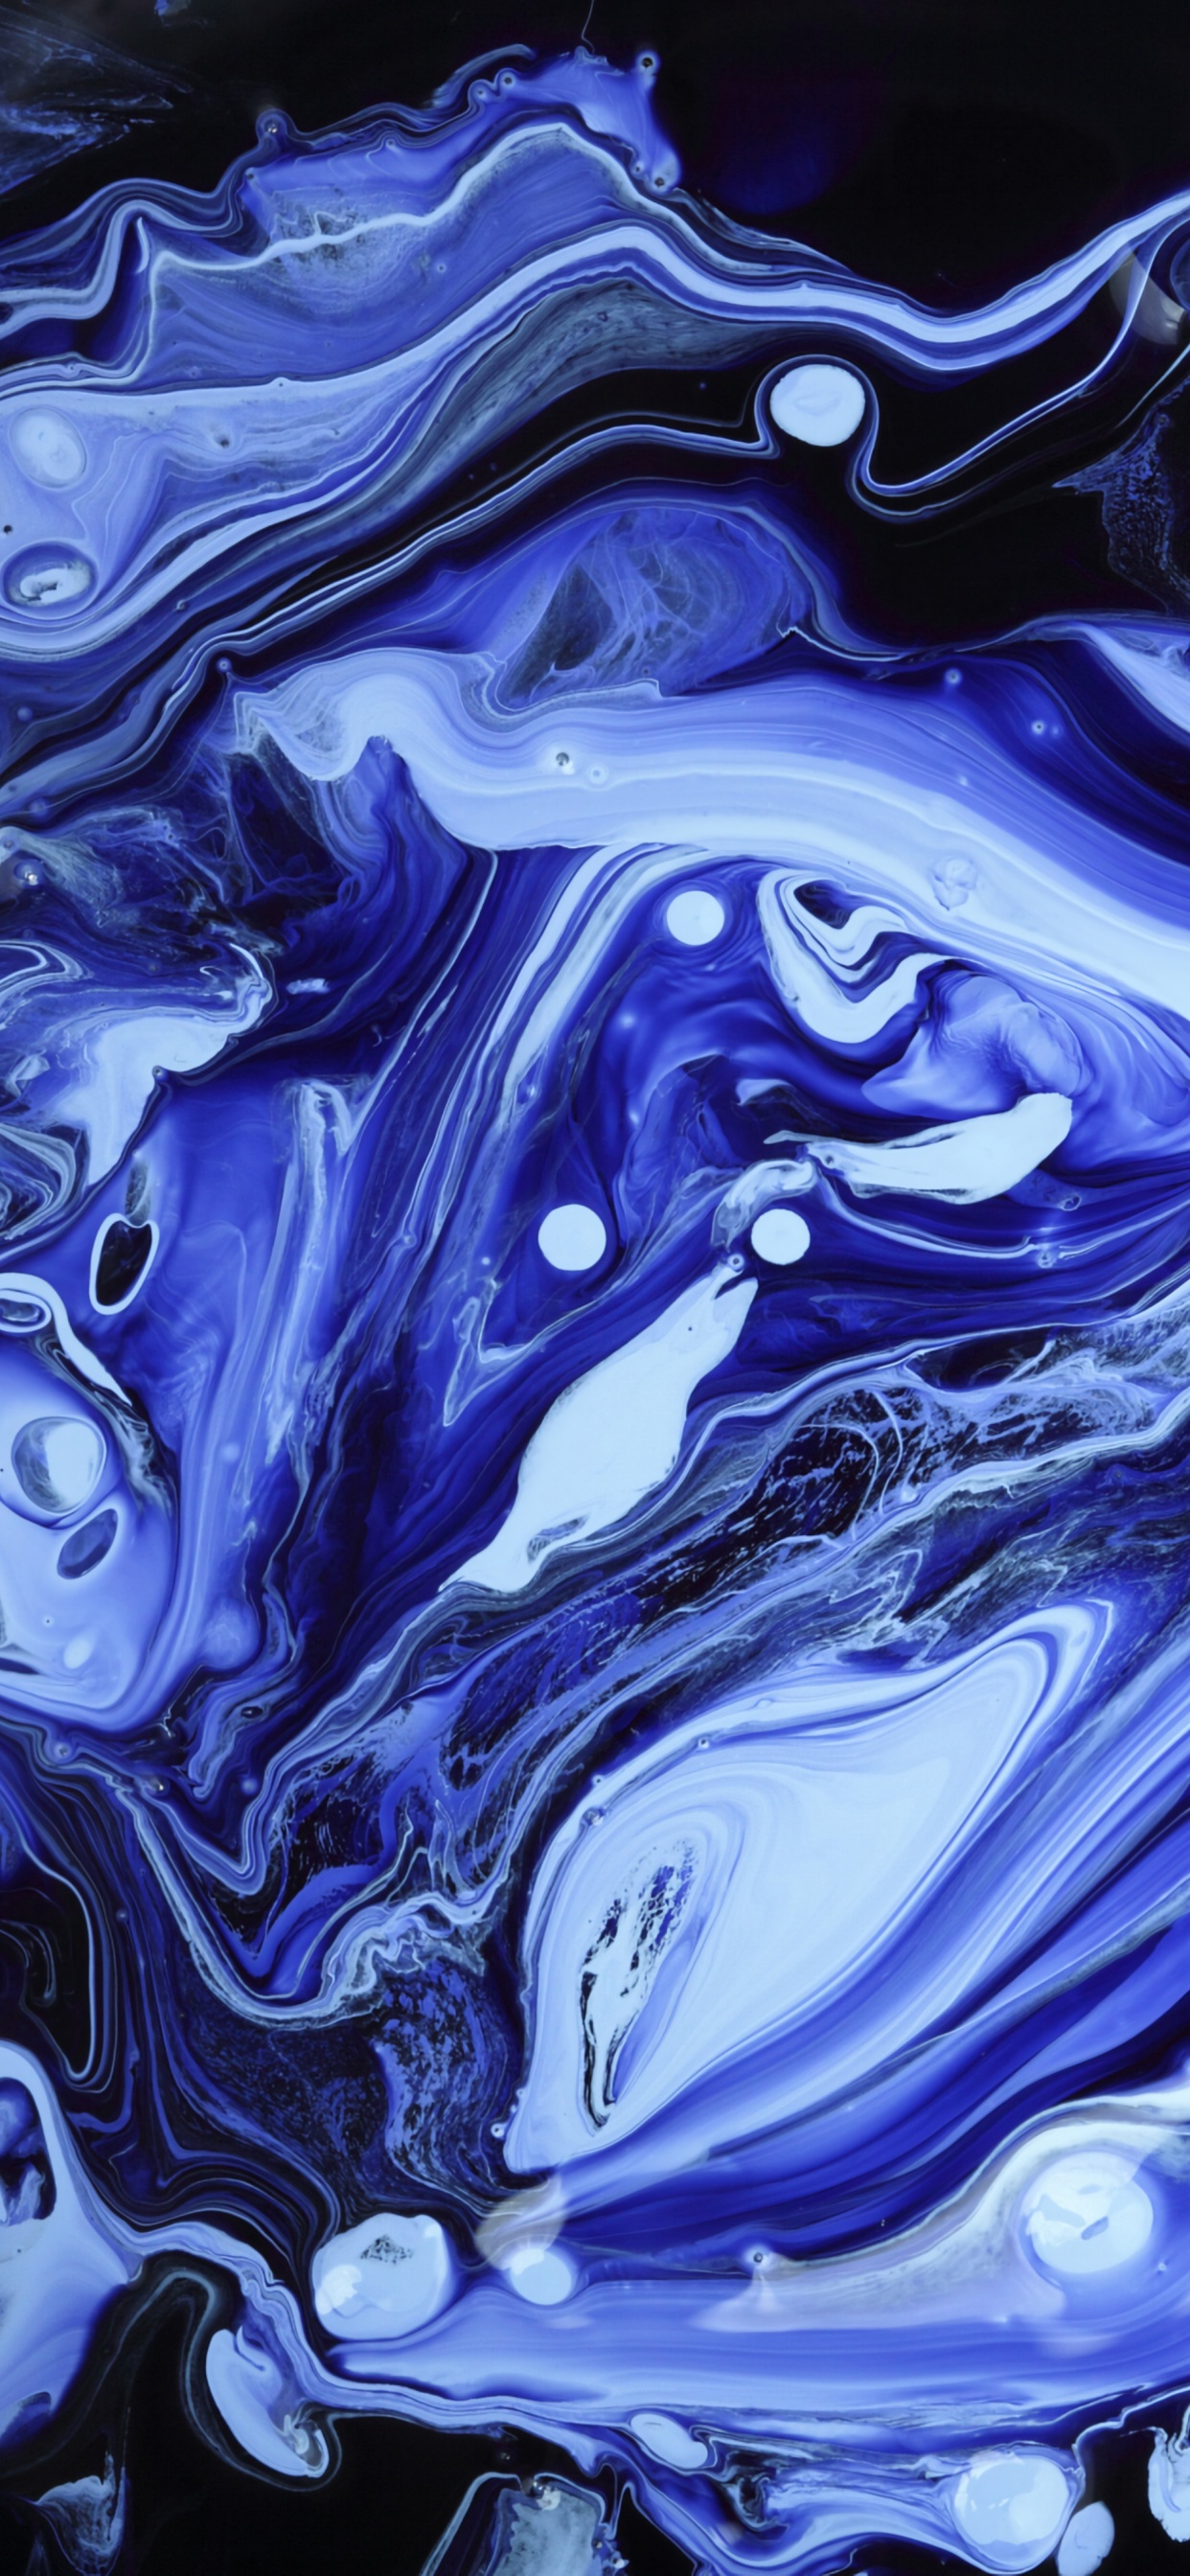 Water Drops on Blue Water. Wallpaper in 1242x2688 Resolution